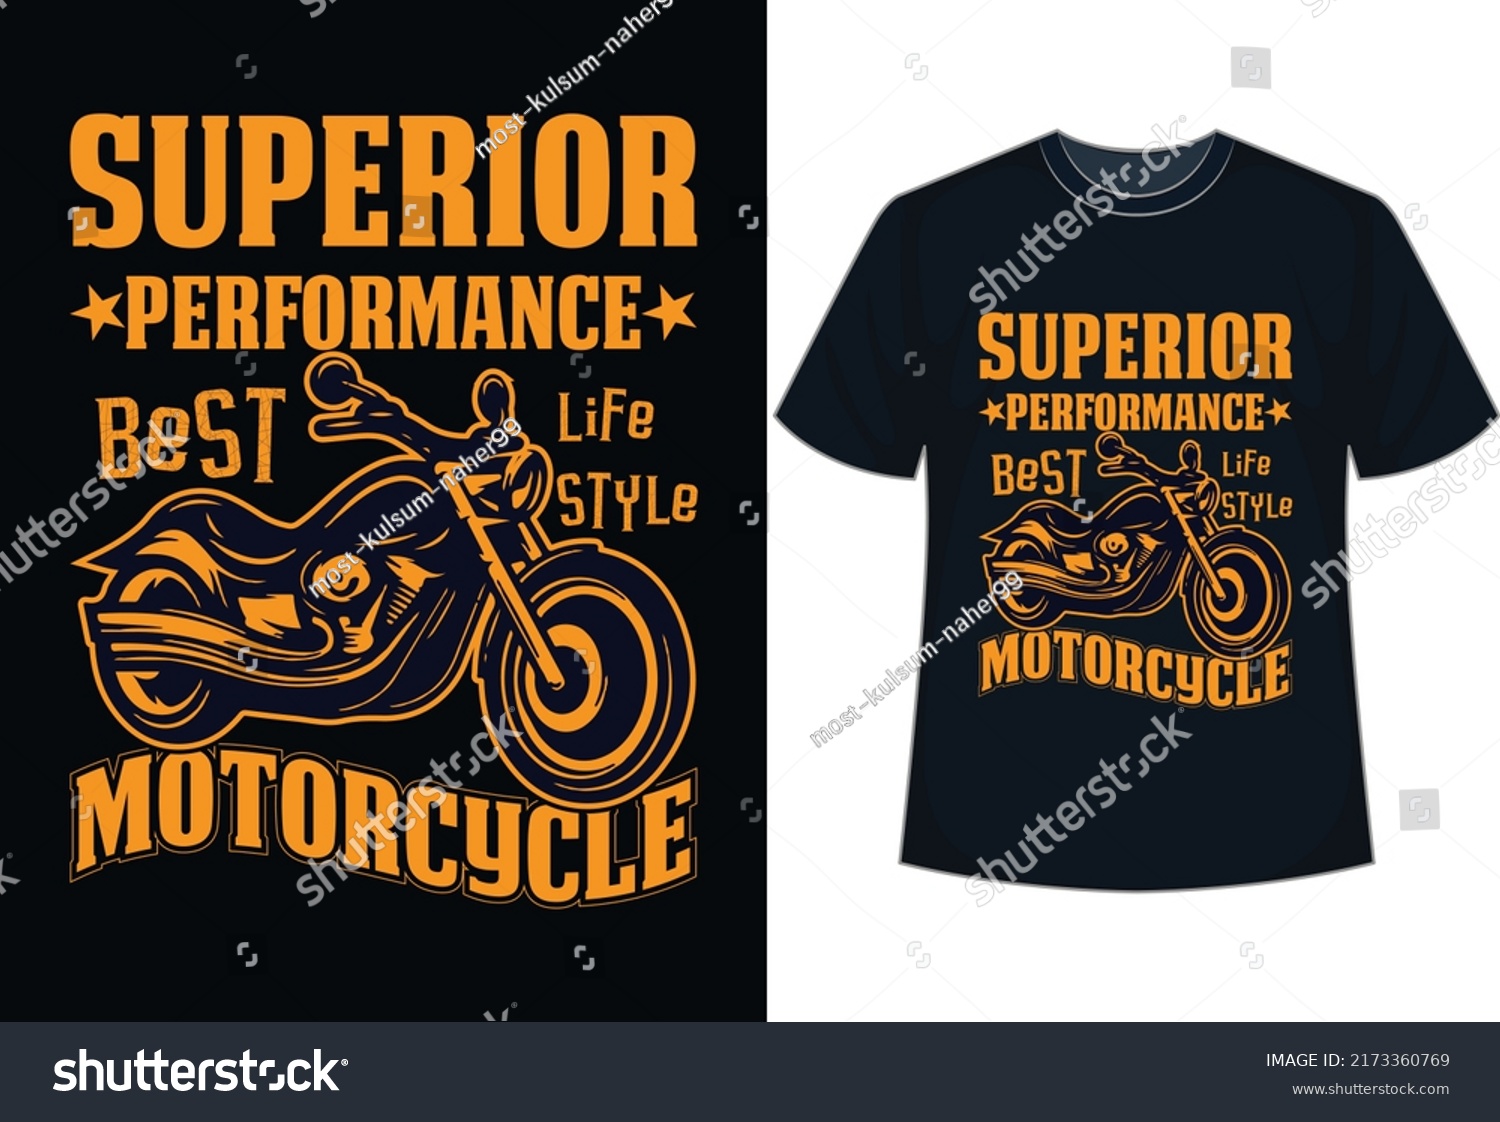 SVG of Superior bike t-shirt design, retro motorcycle, bike rider t-shirt design. svg